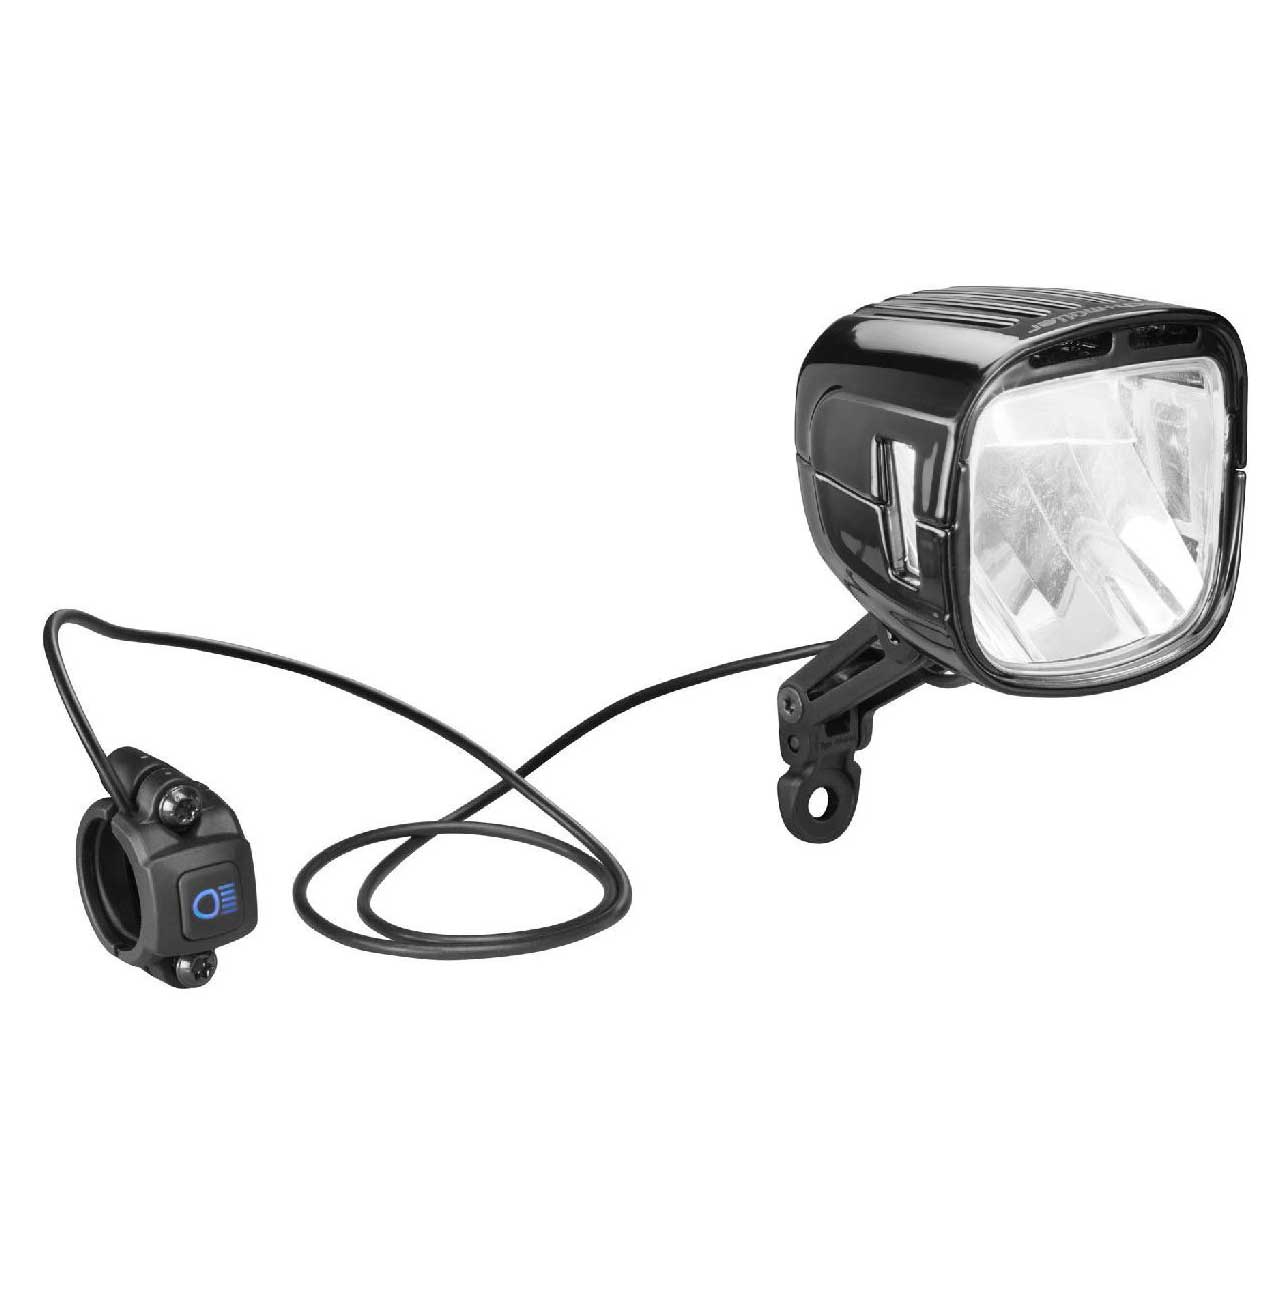 Productfoto van Busch + Müller Lumotec IQ-XL E-Bike LED Fietslamp Vooraan - 169U65TS-01 - zwart